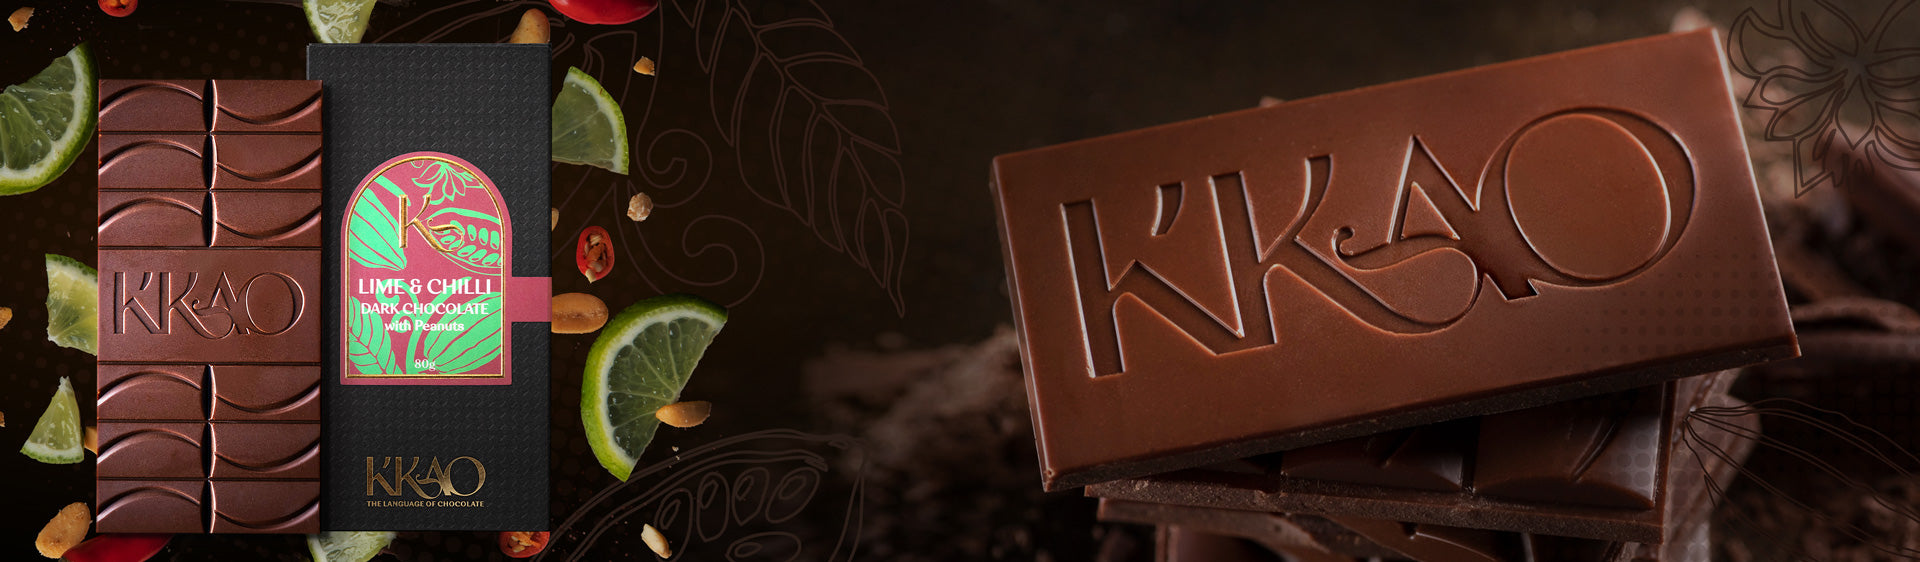 Innovative Chocolate: K'KAO's Sugar-Free Chocolate Bars